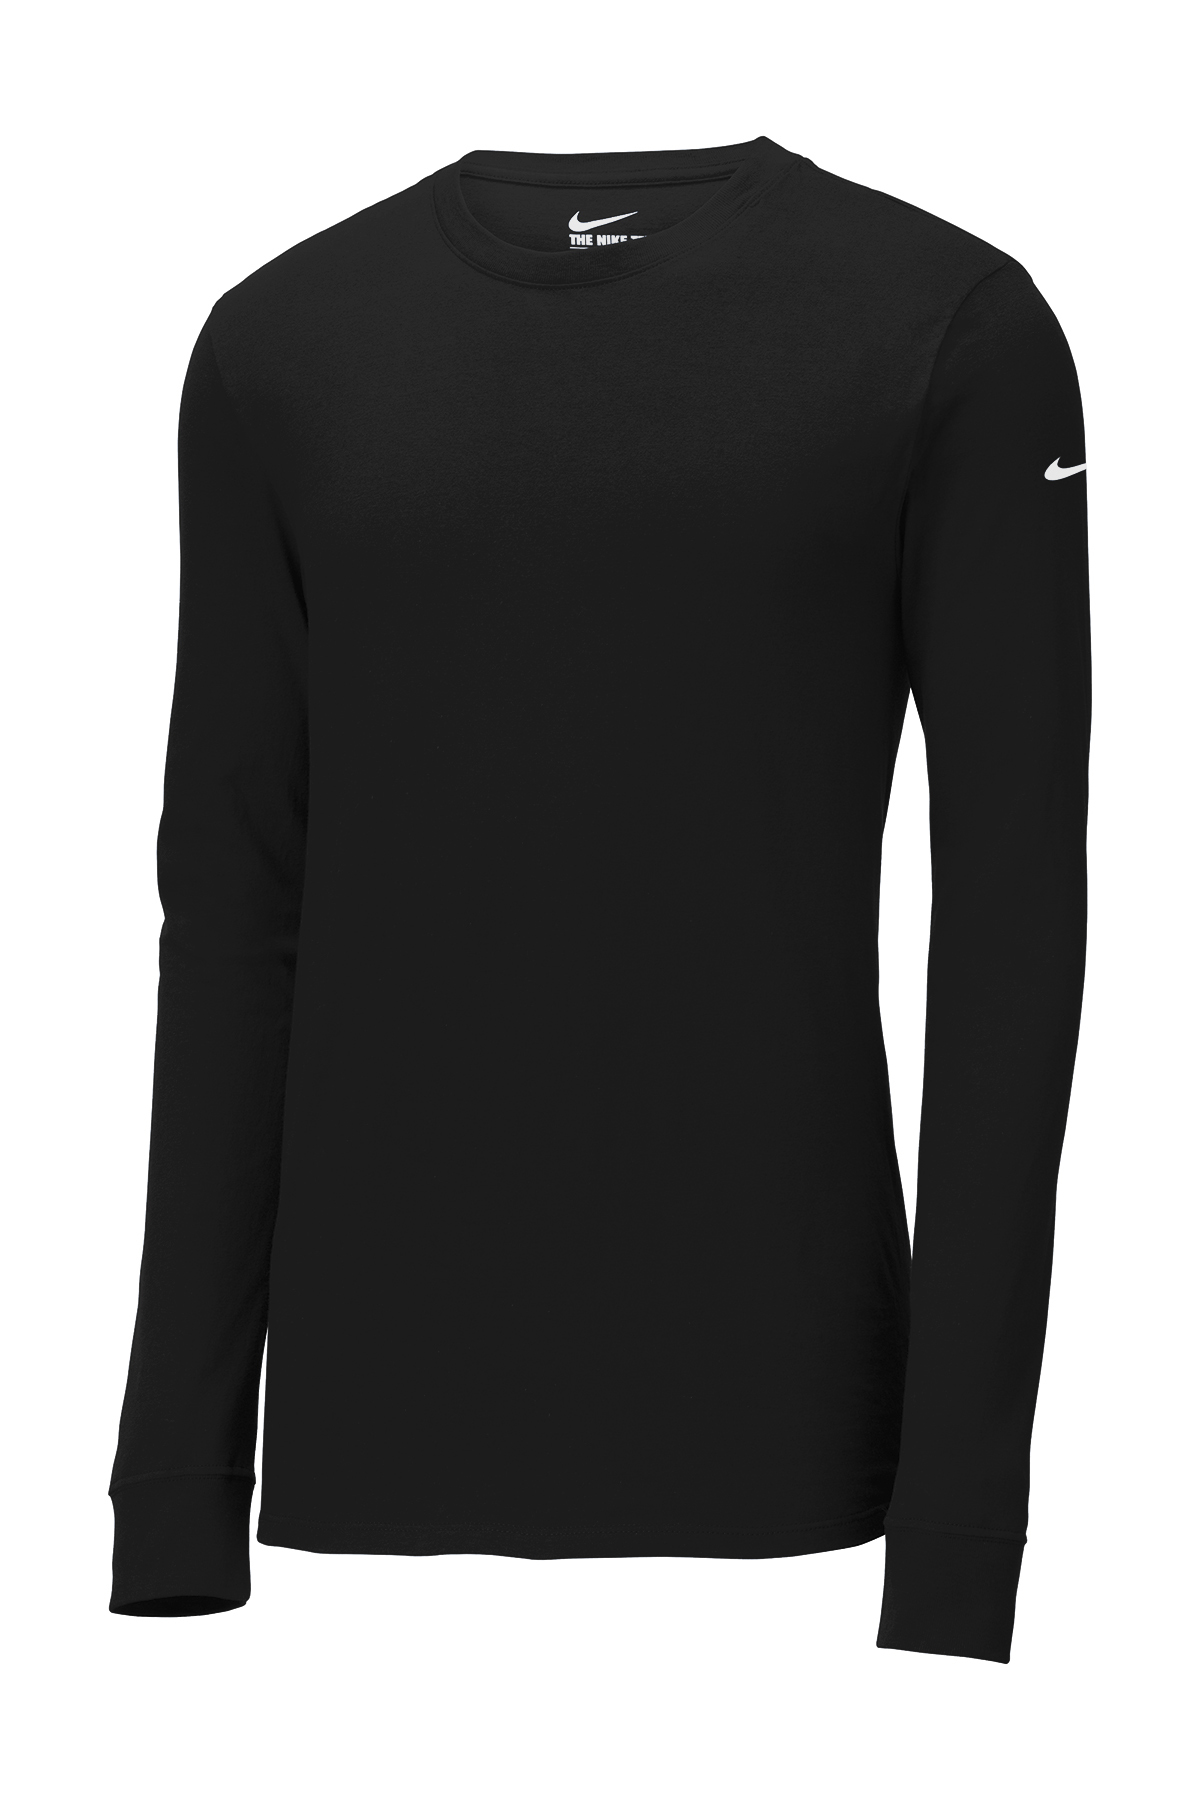 Nike Dri-FIT Cotton/Poly Long Sleeve Tee | Product | SanMar